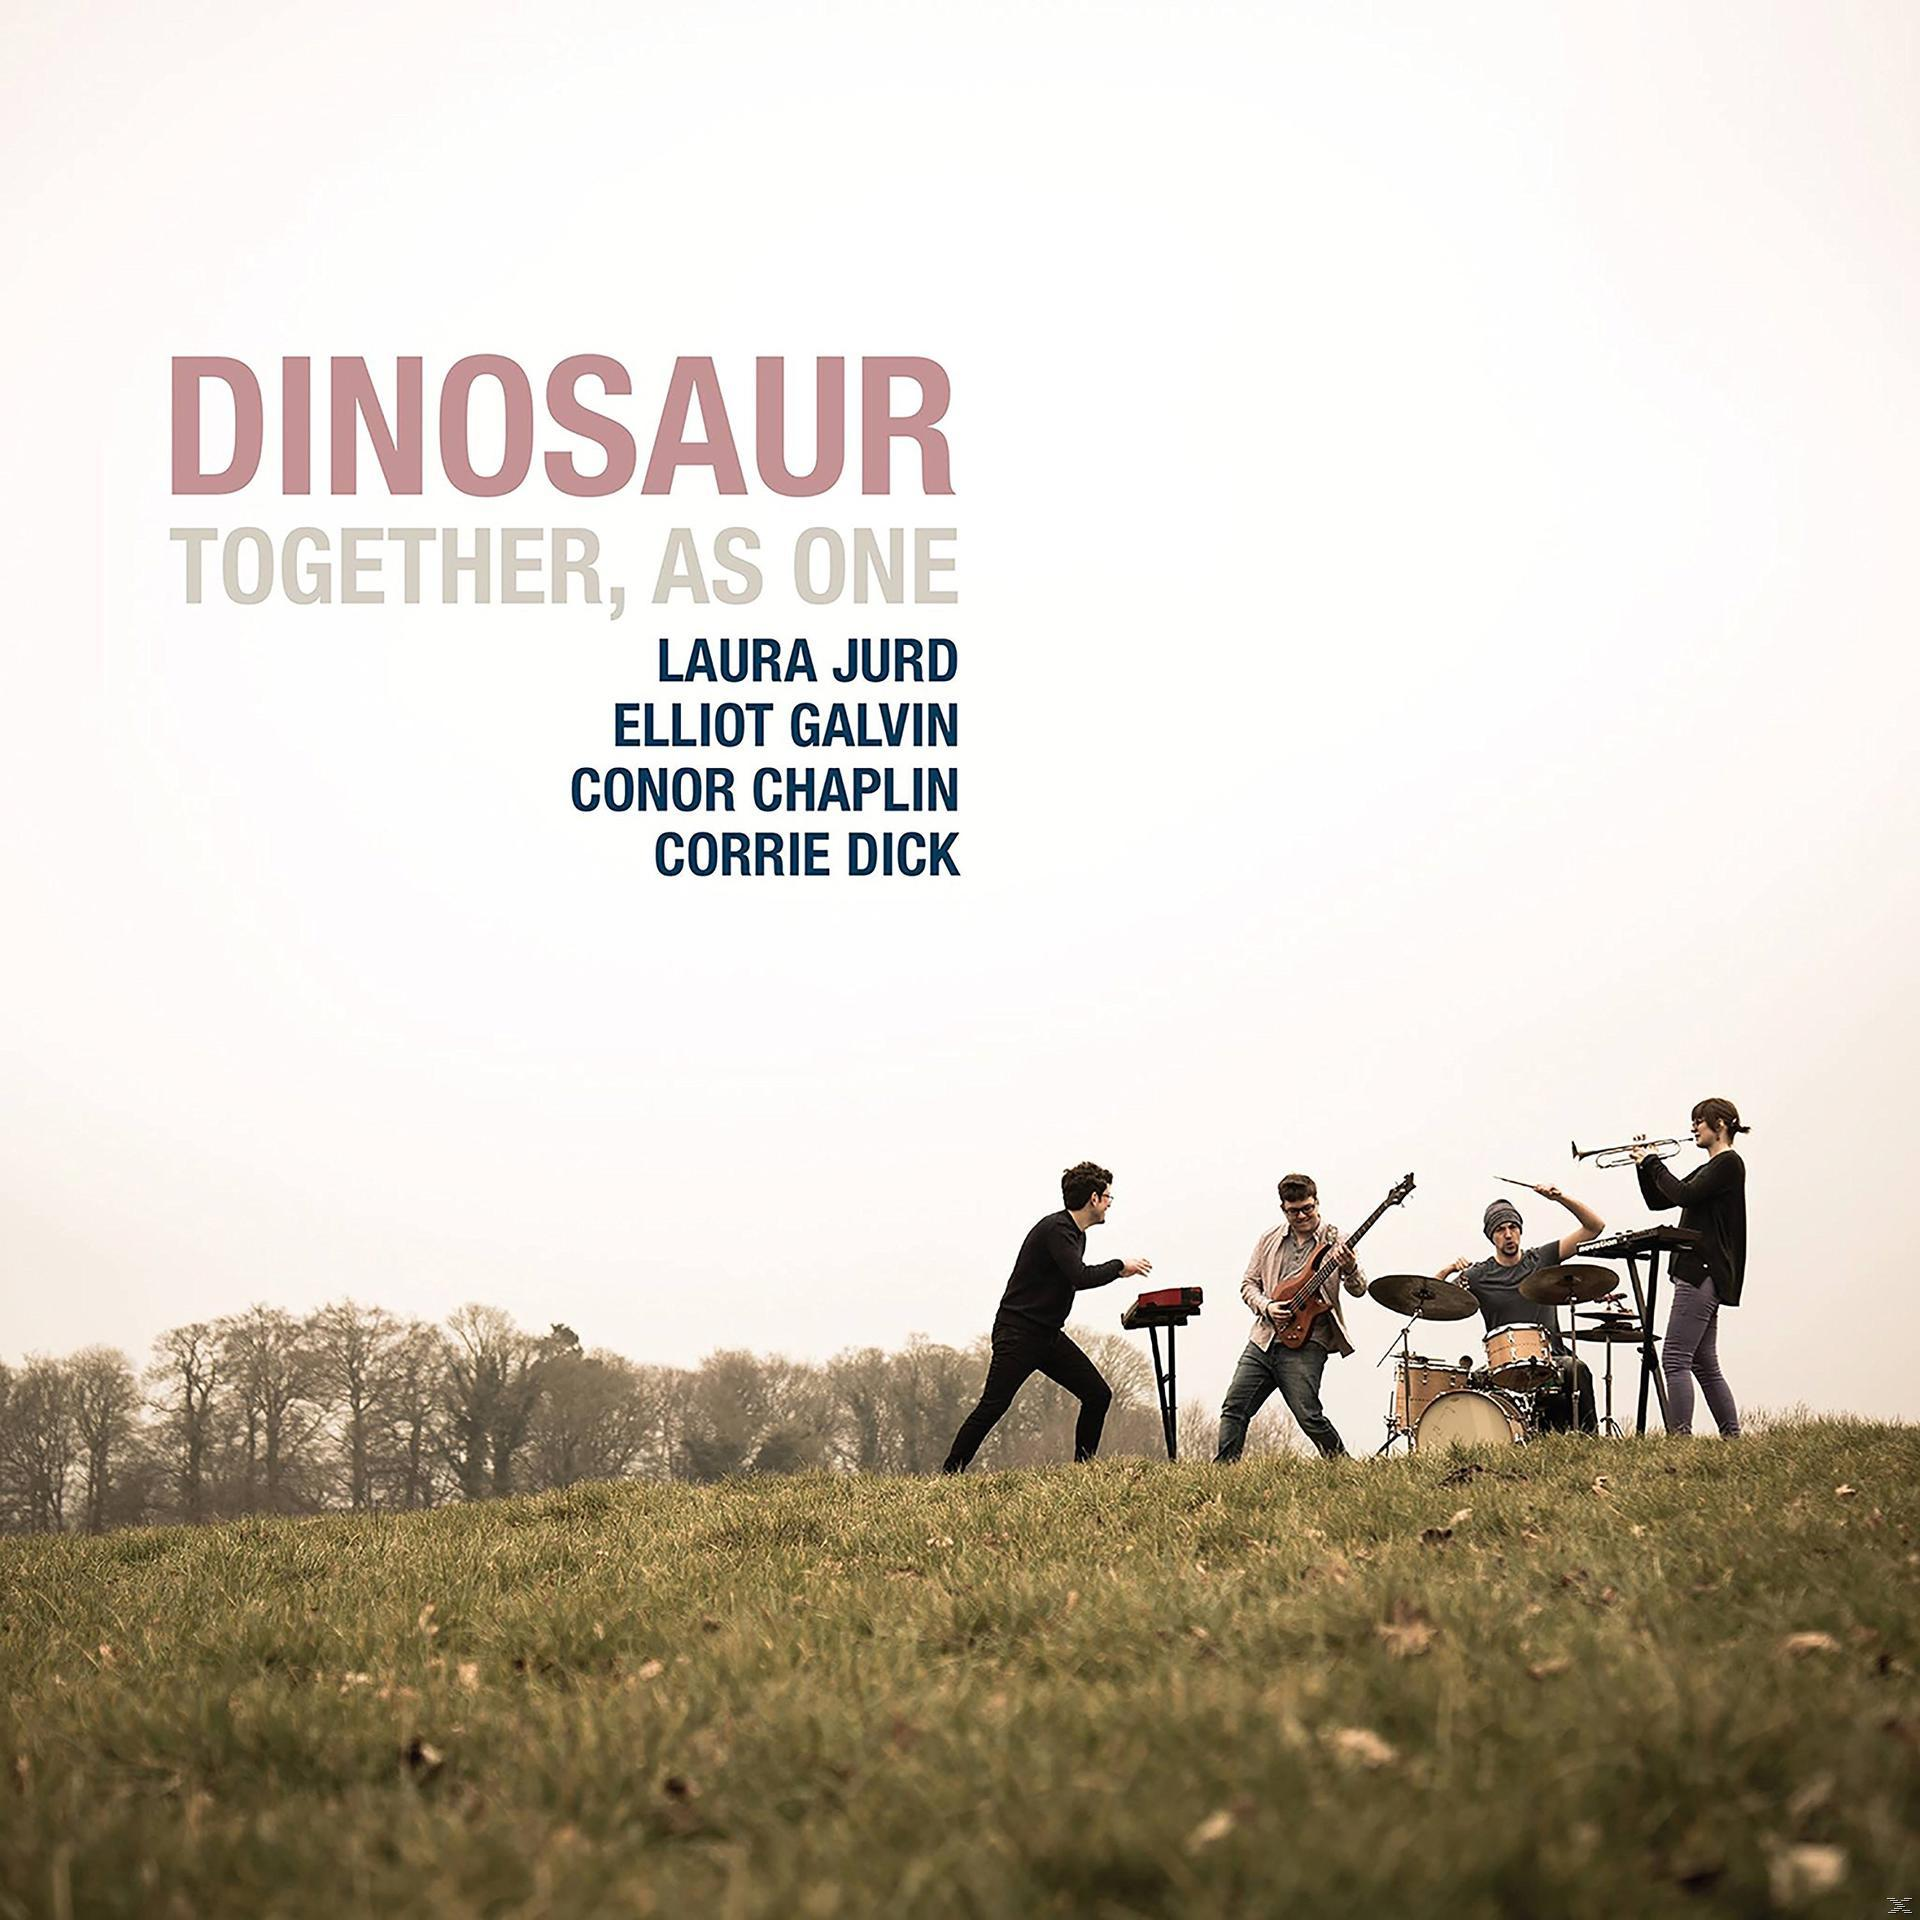 Dinosaur One Together,As - - Jr. (Vinyl)